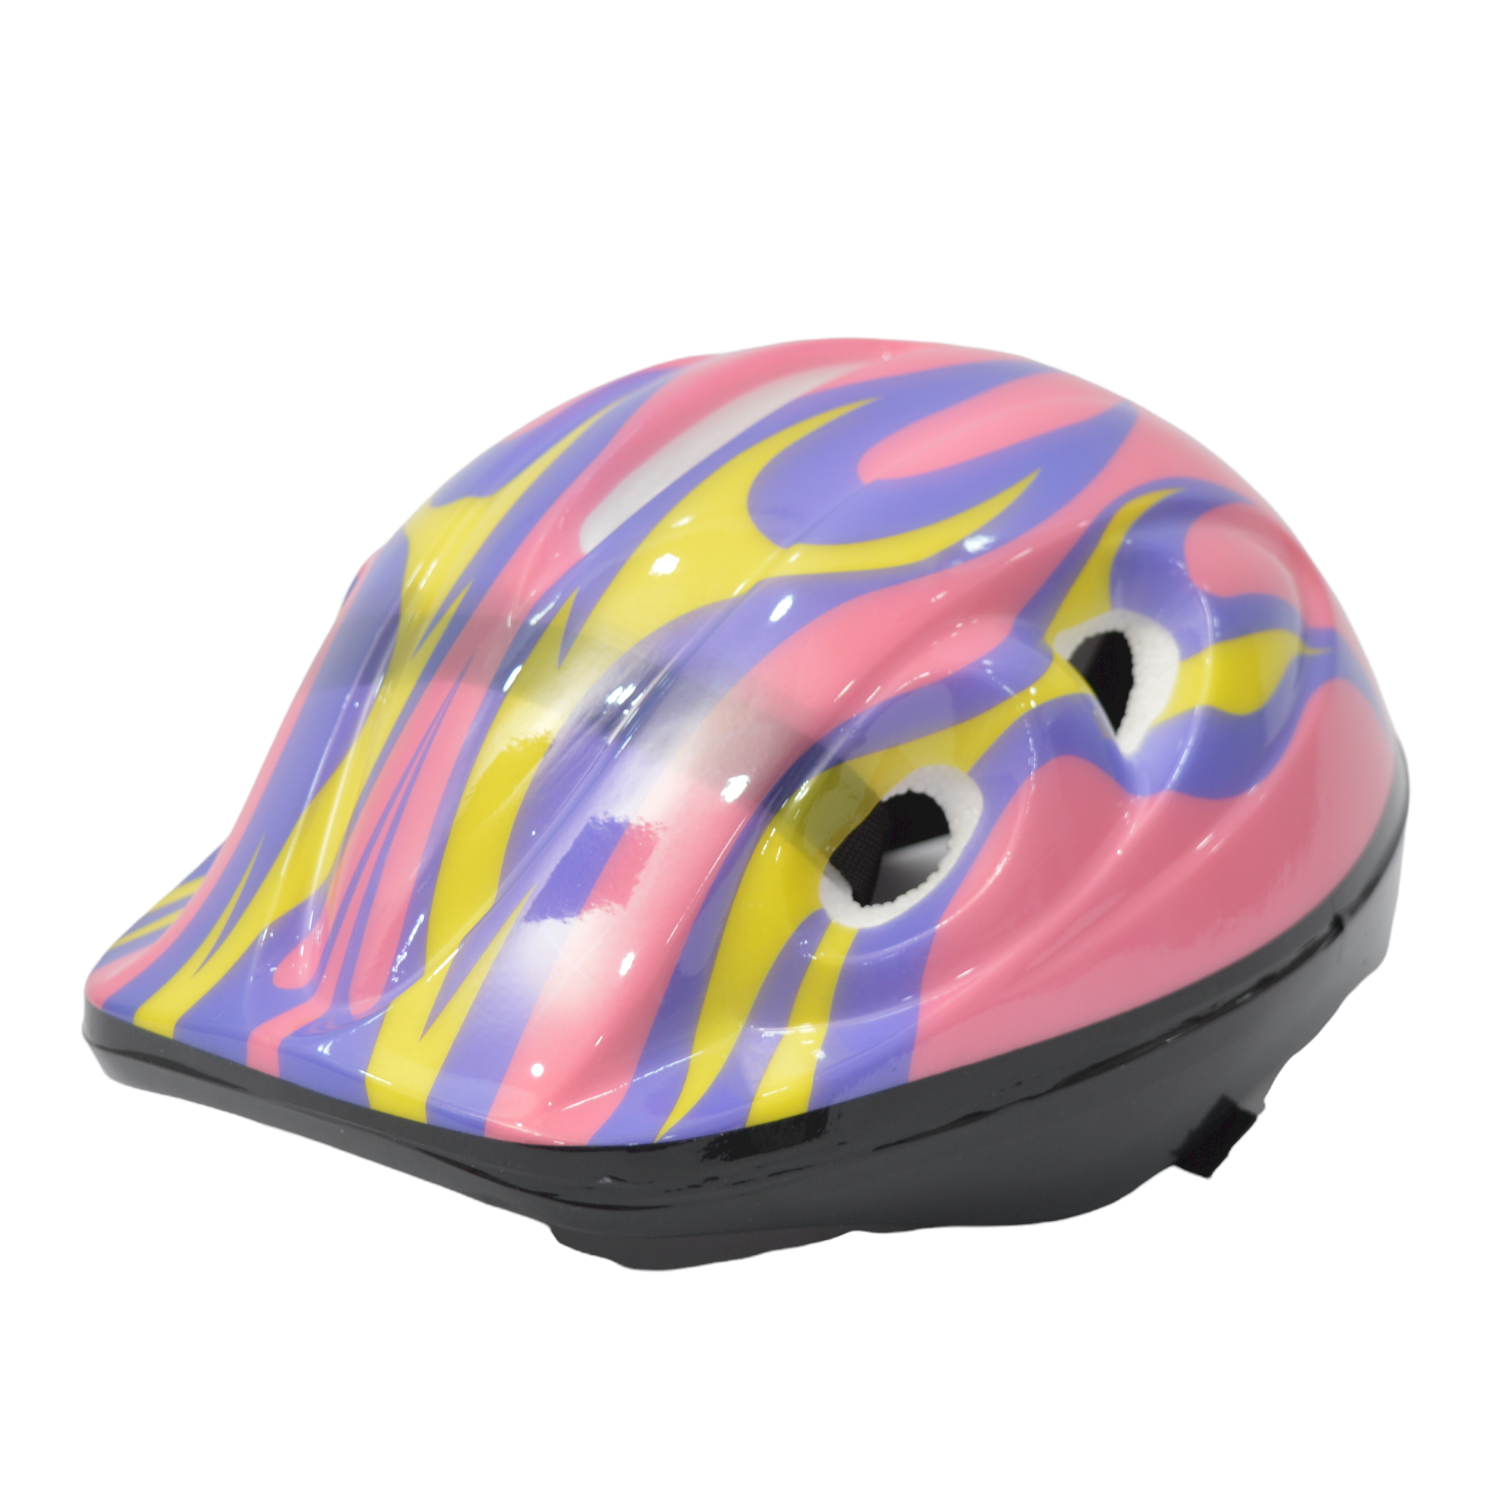 Sports Safety Helmet For Kids